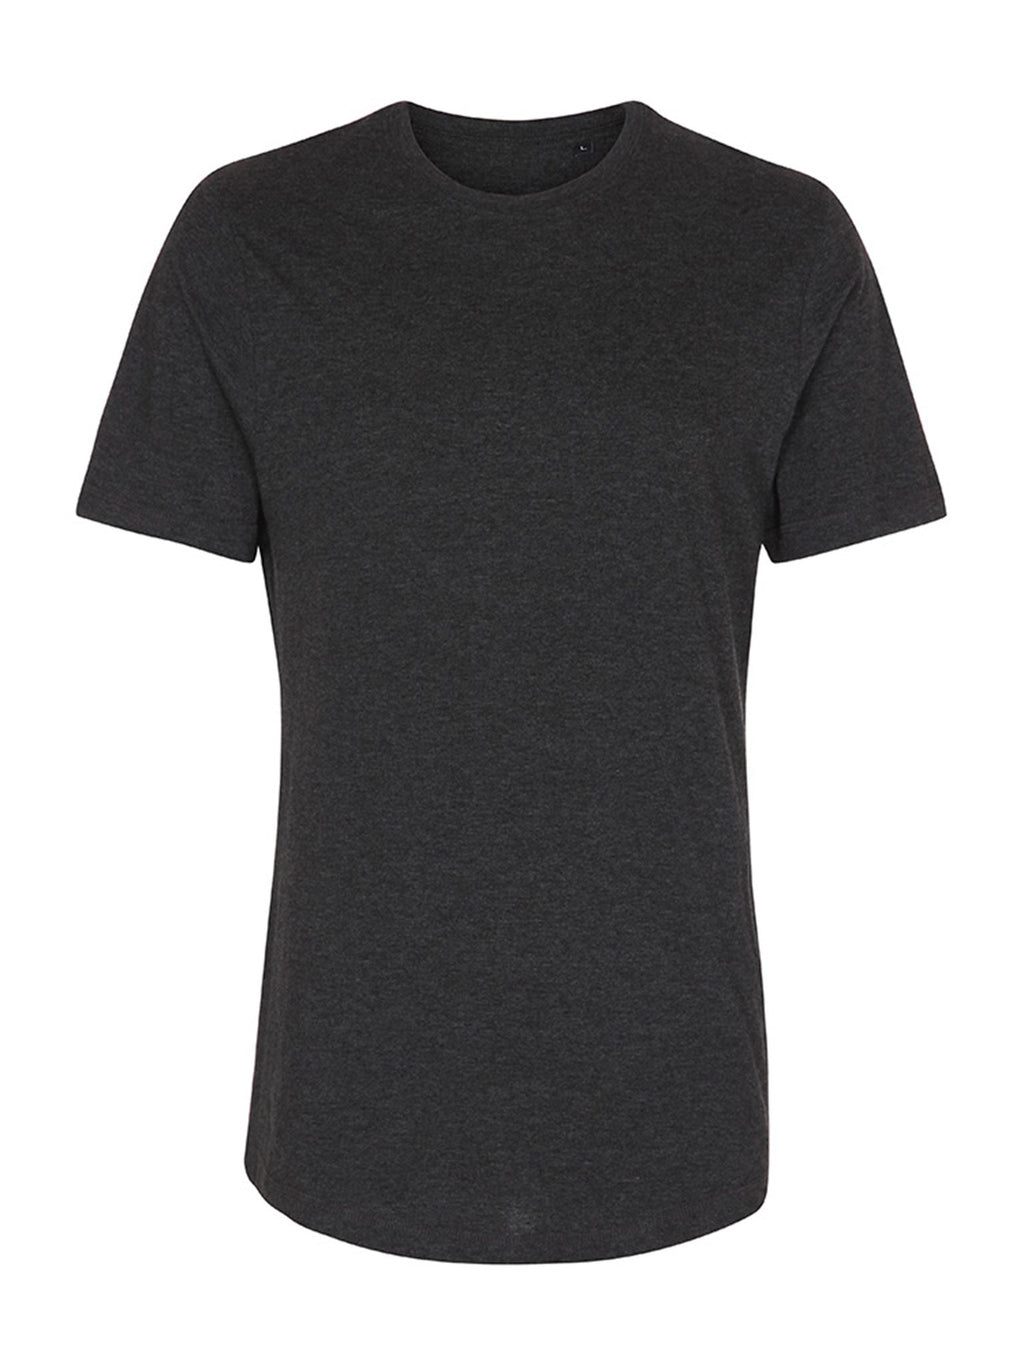 Langes T -Shirt - dunkelgraue Melange